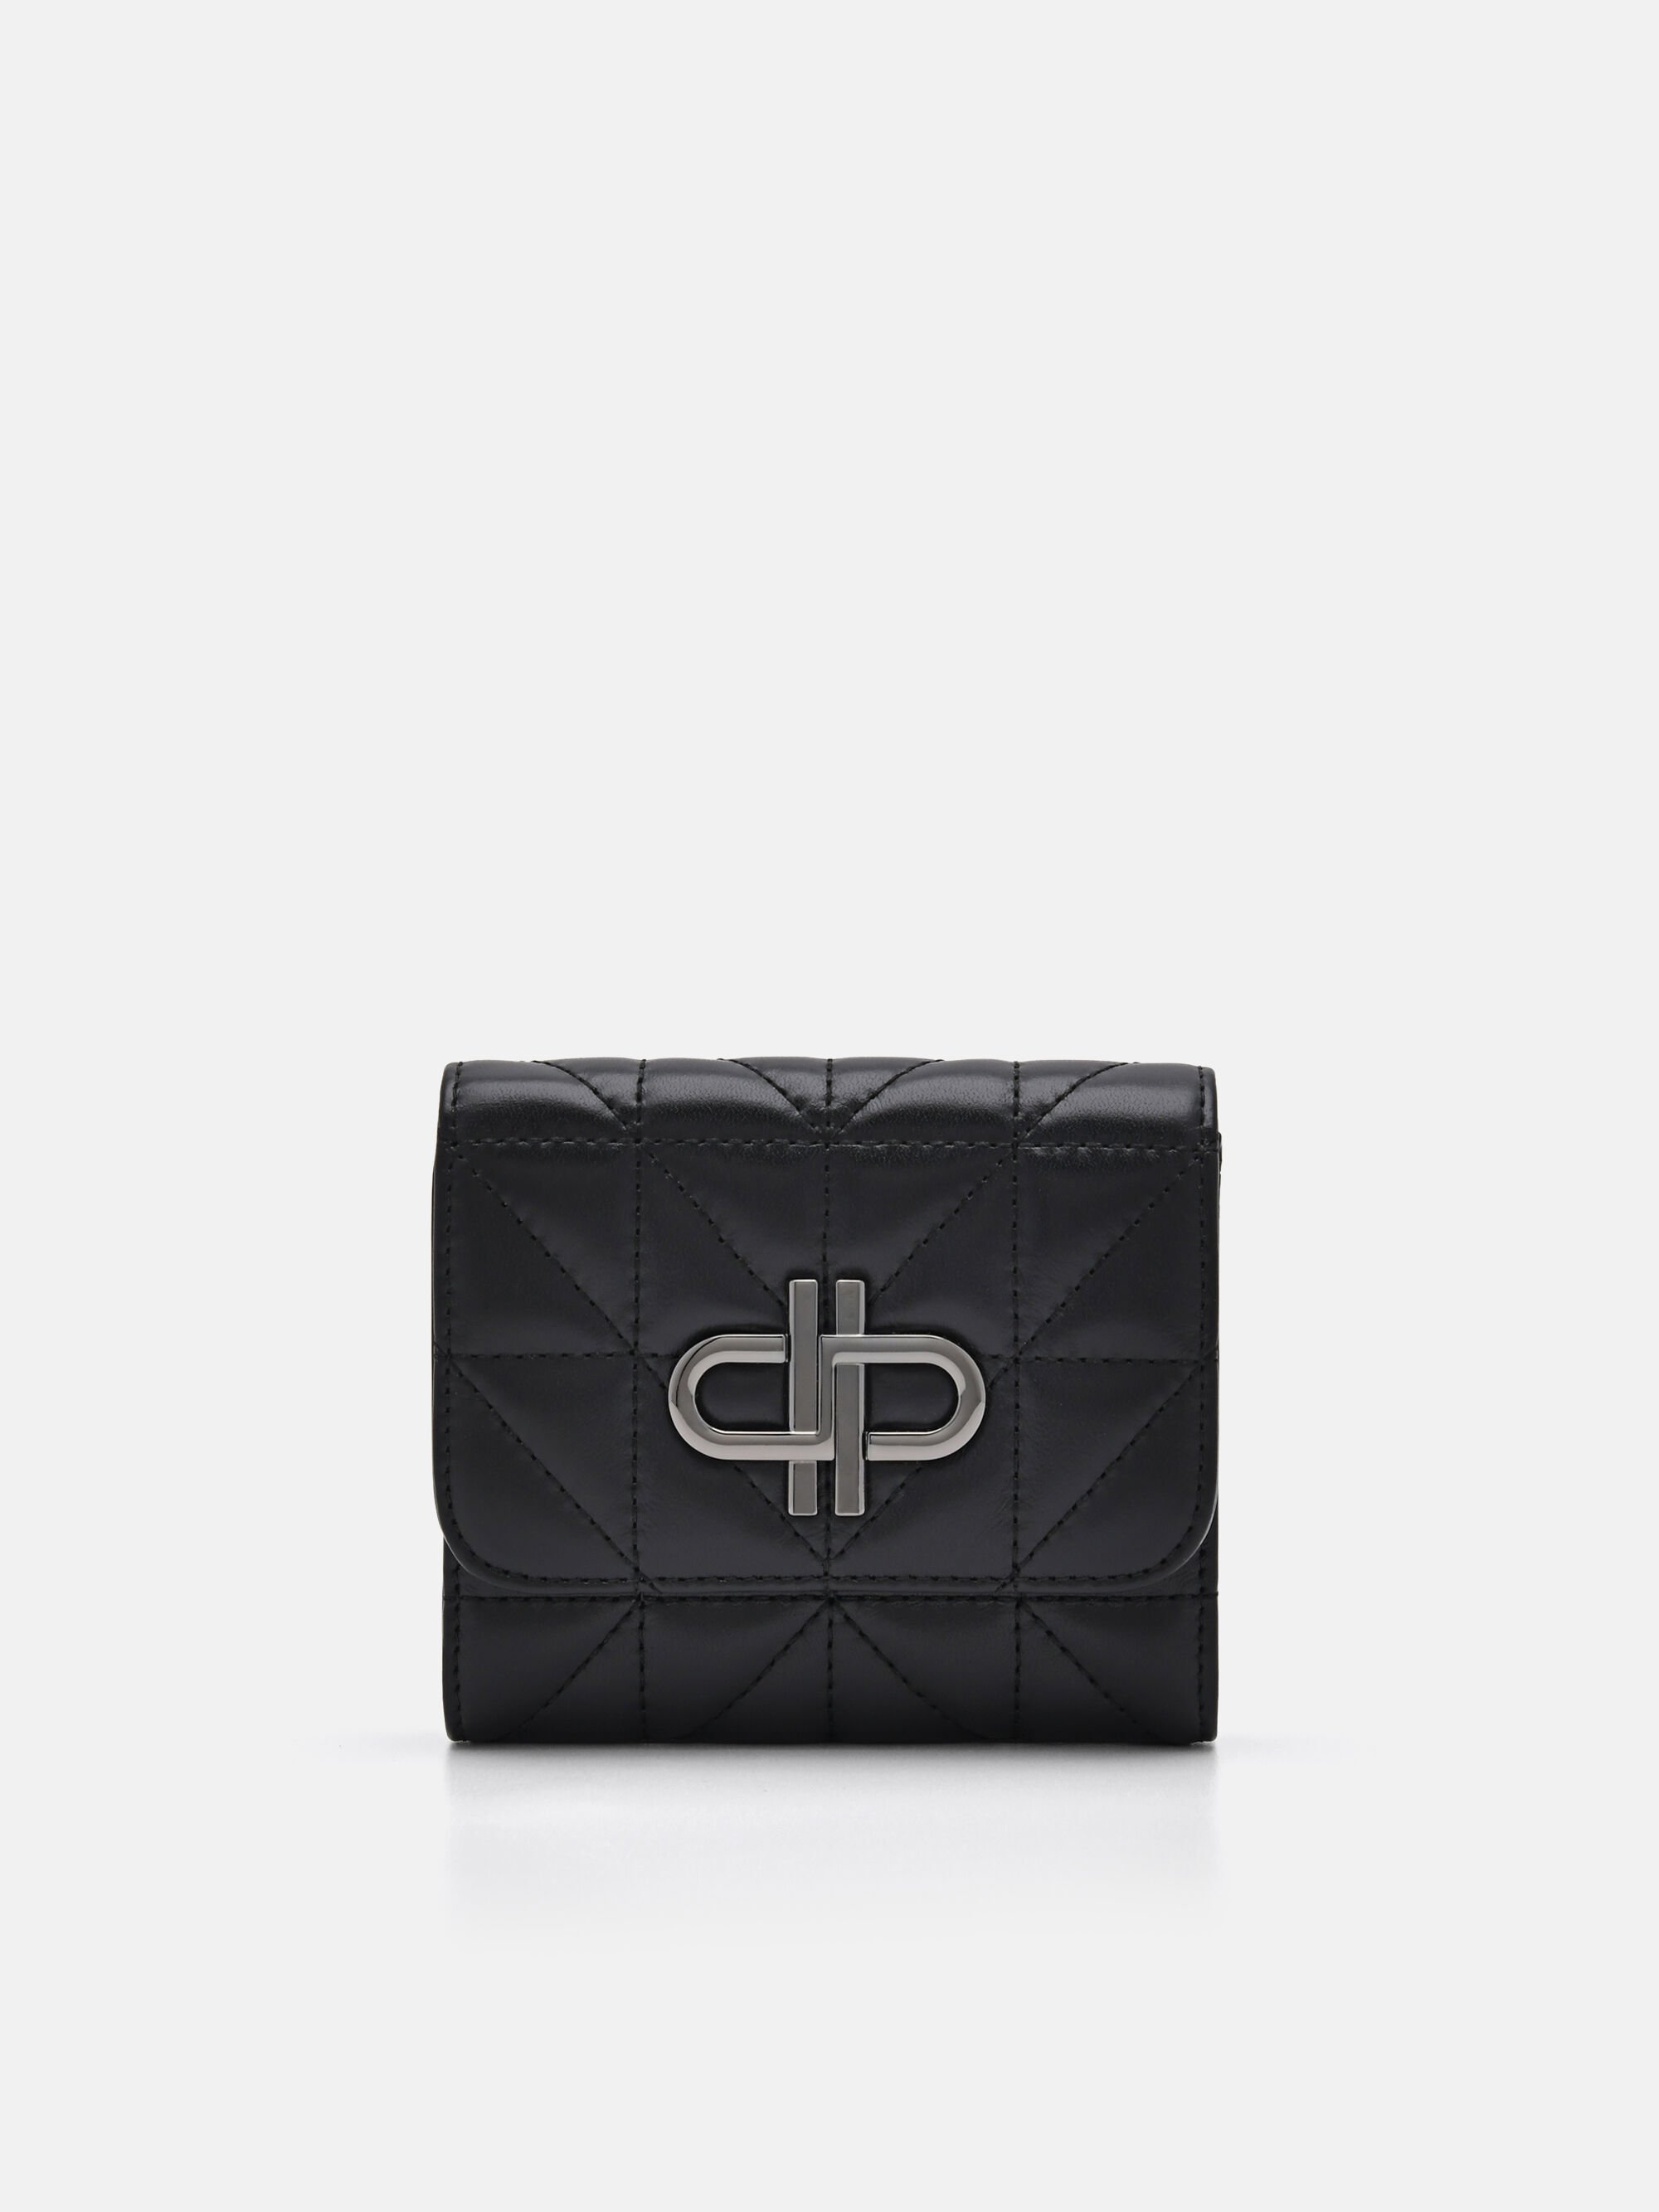 PEDRO Icon Leather Tri-Fold Wallet in Pixel, Black